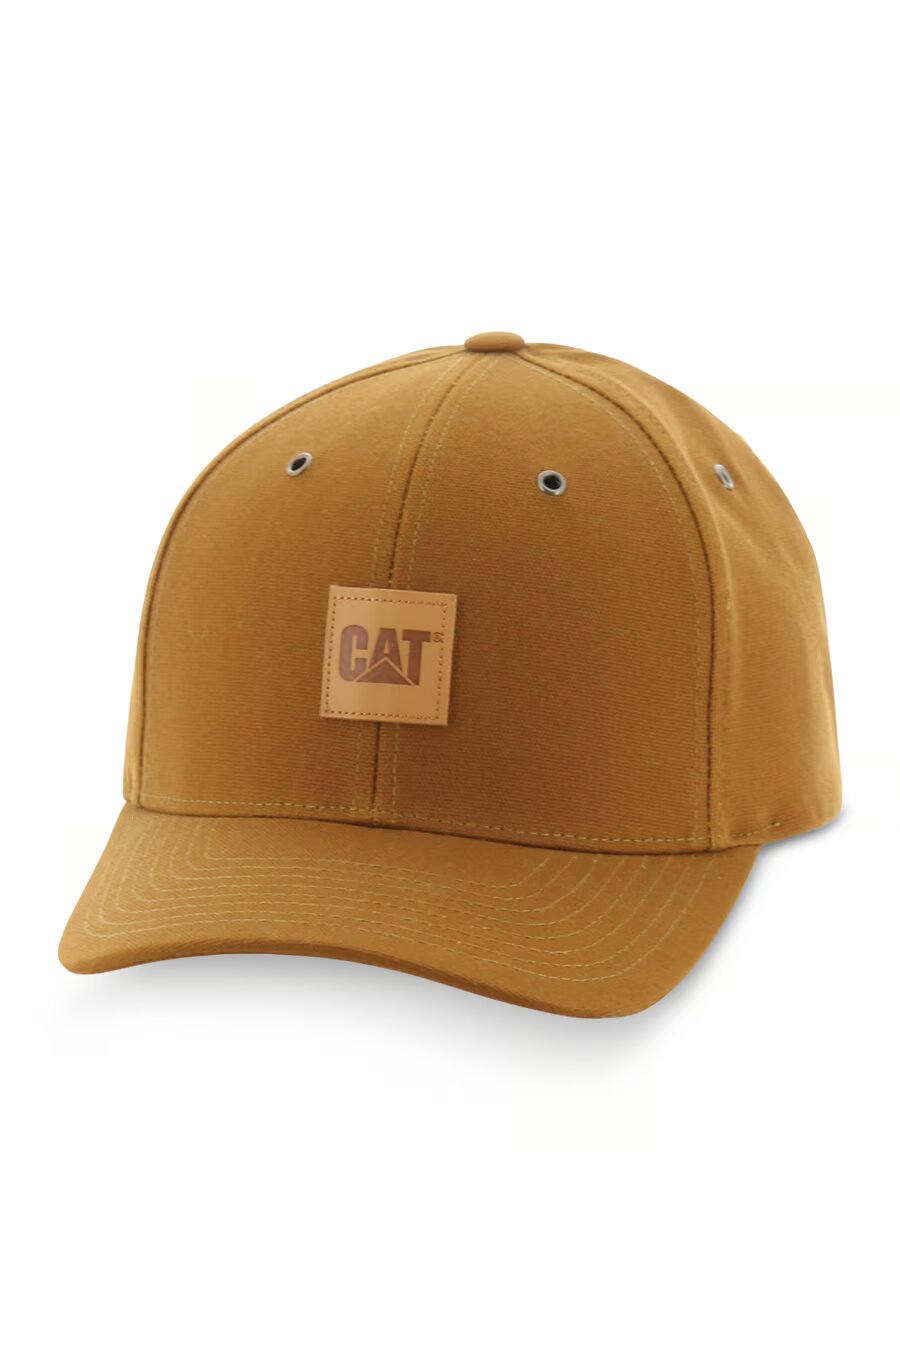 CAT Leather Patch Caps